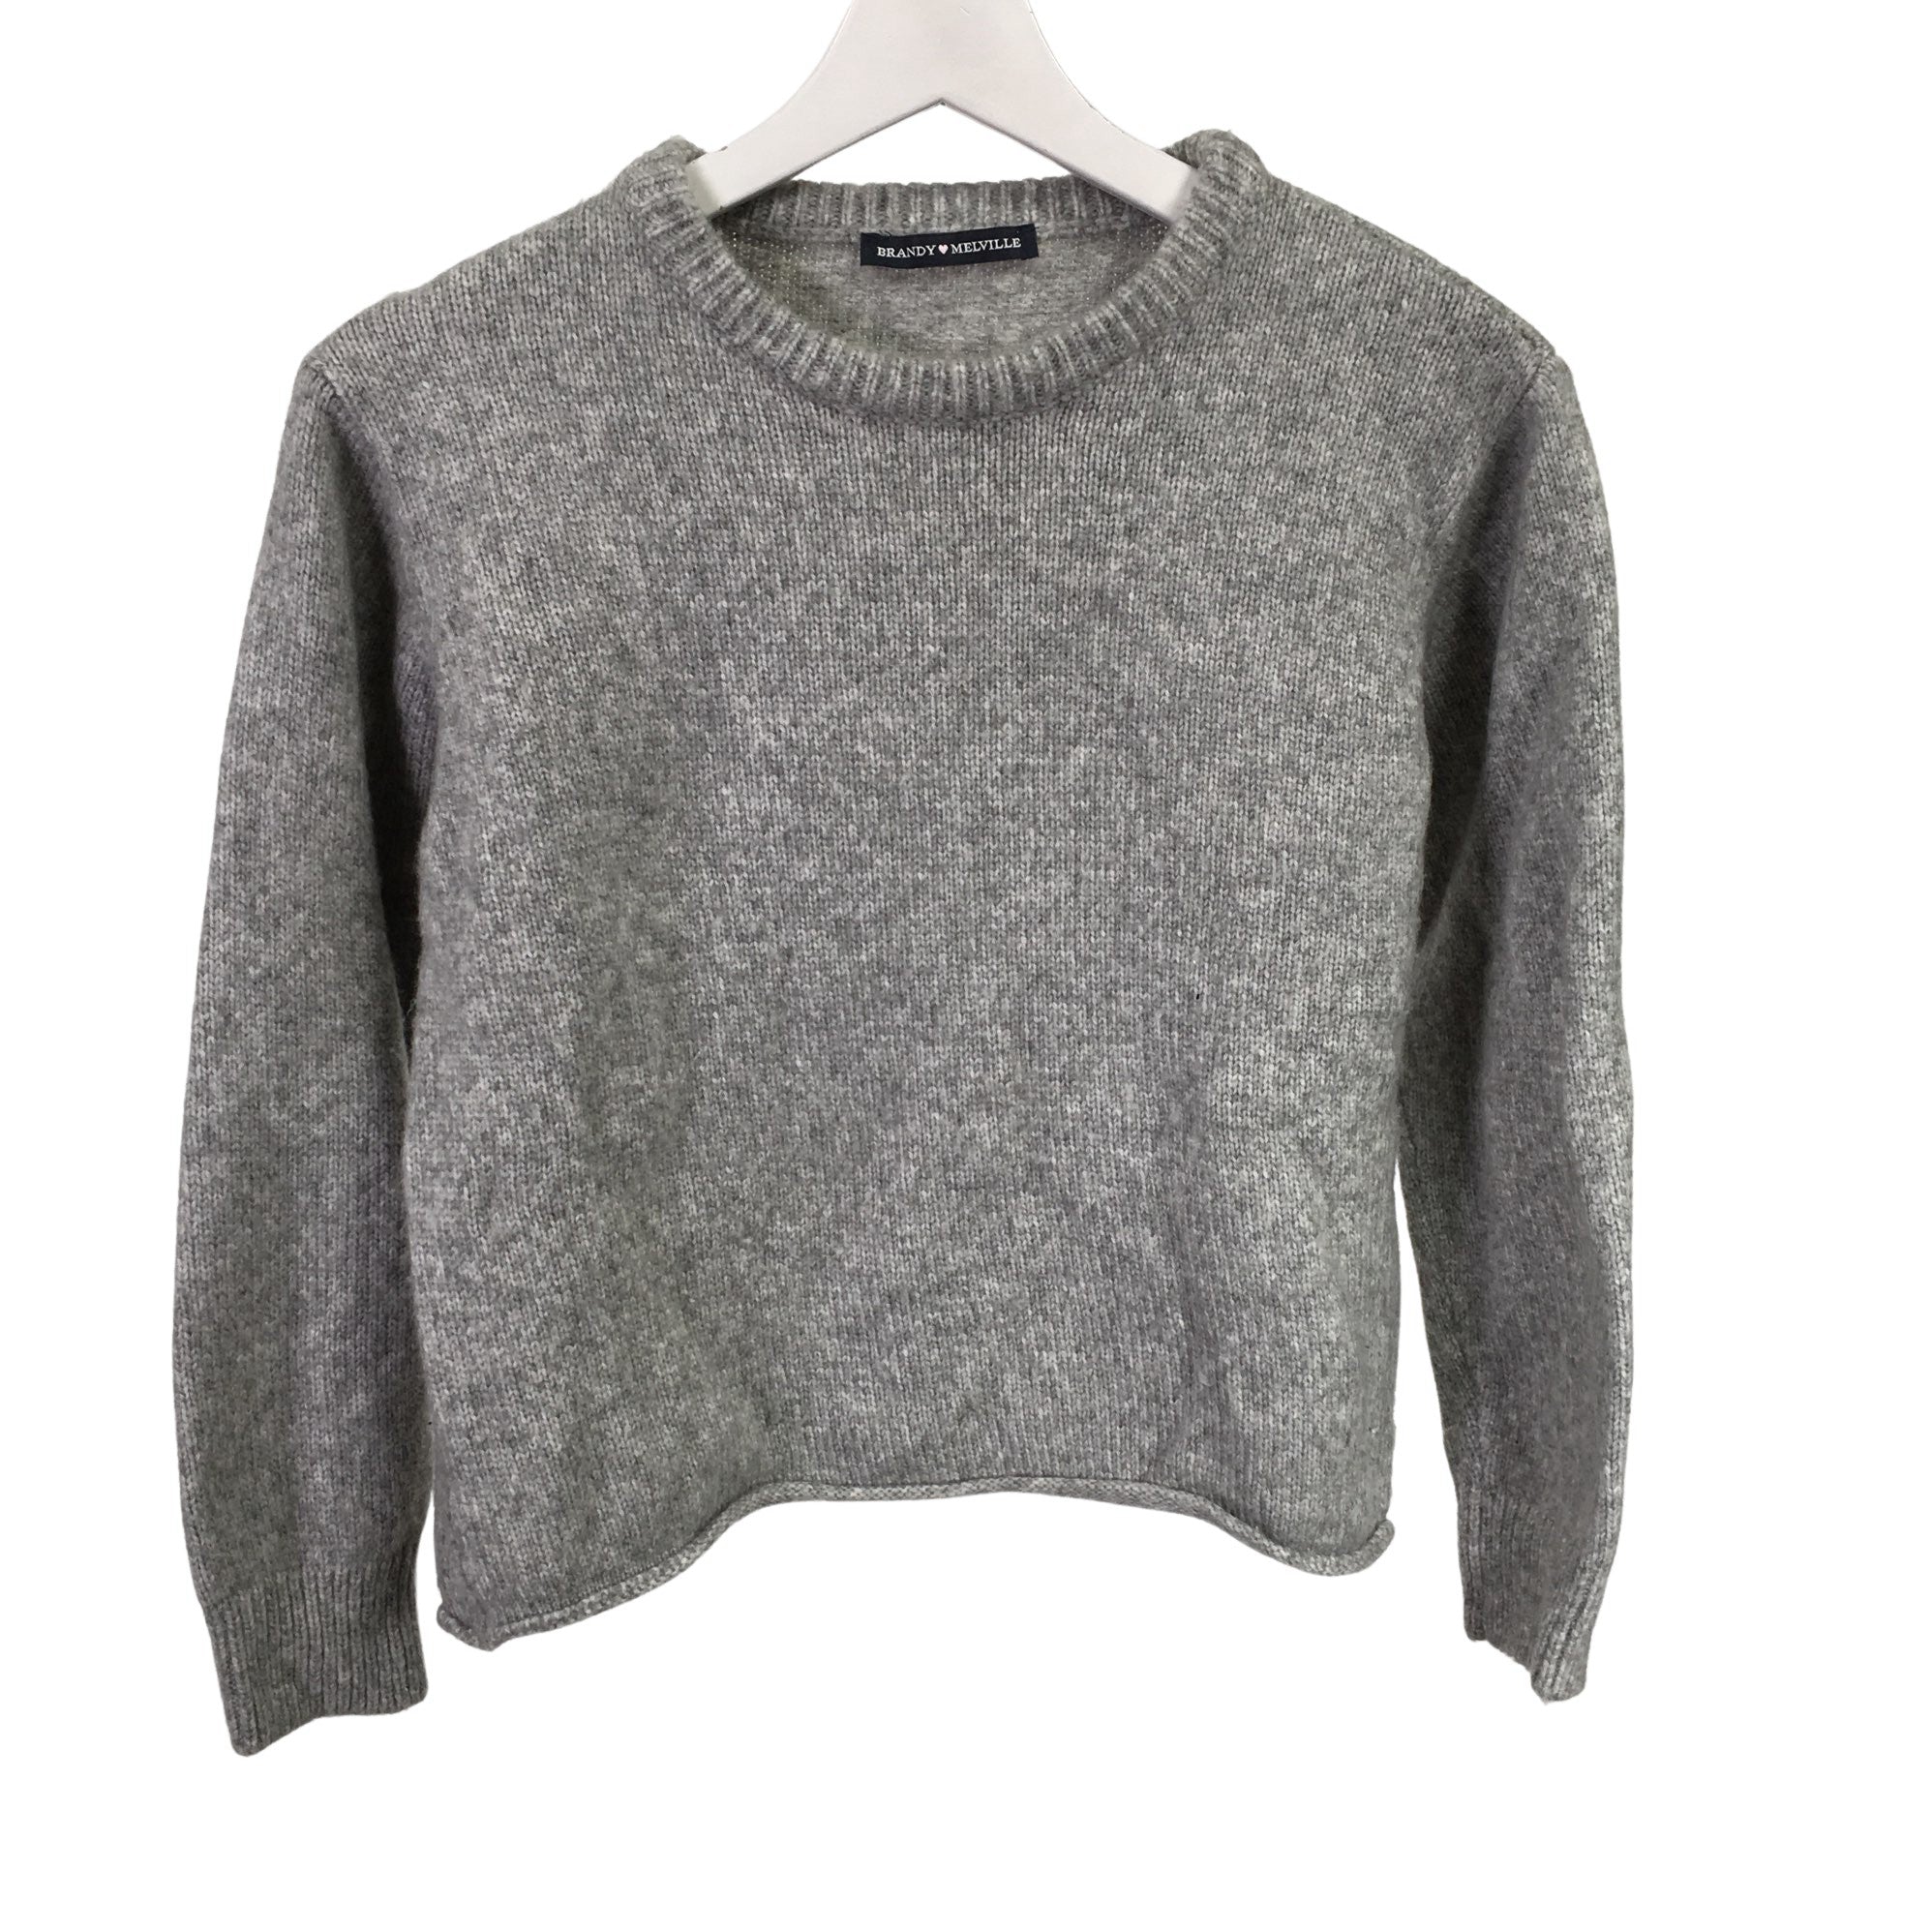 Women's Brandy Melville Sweater, size 34 (Grey)